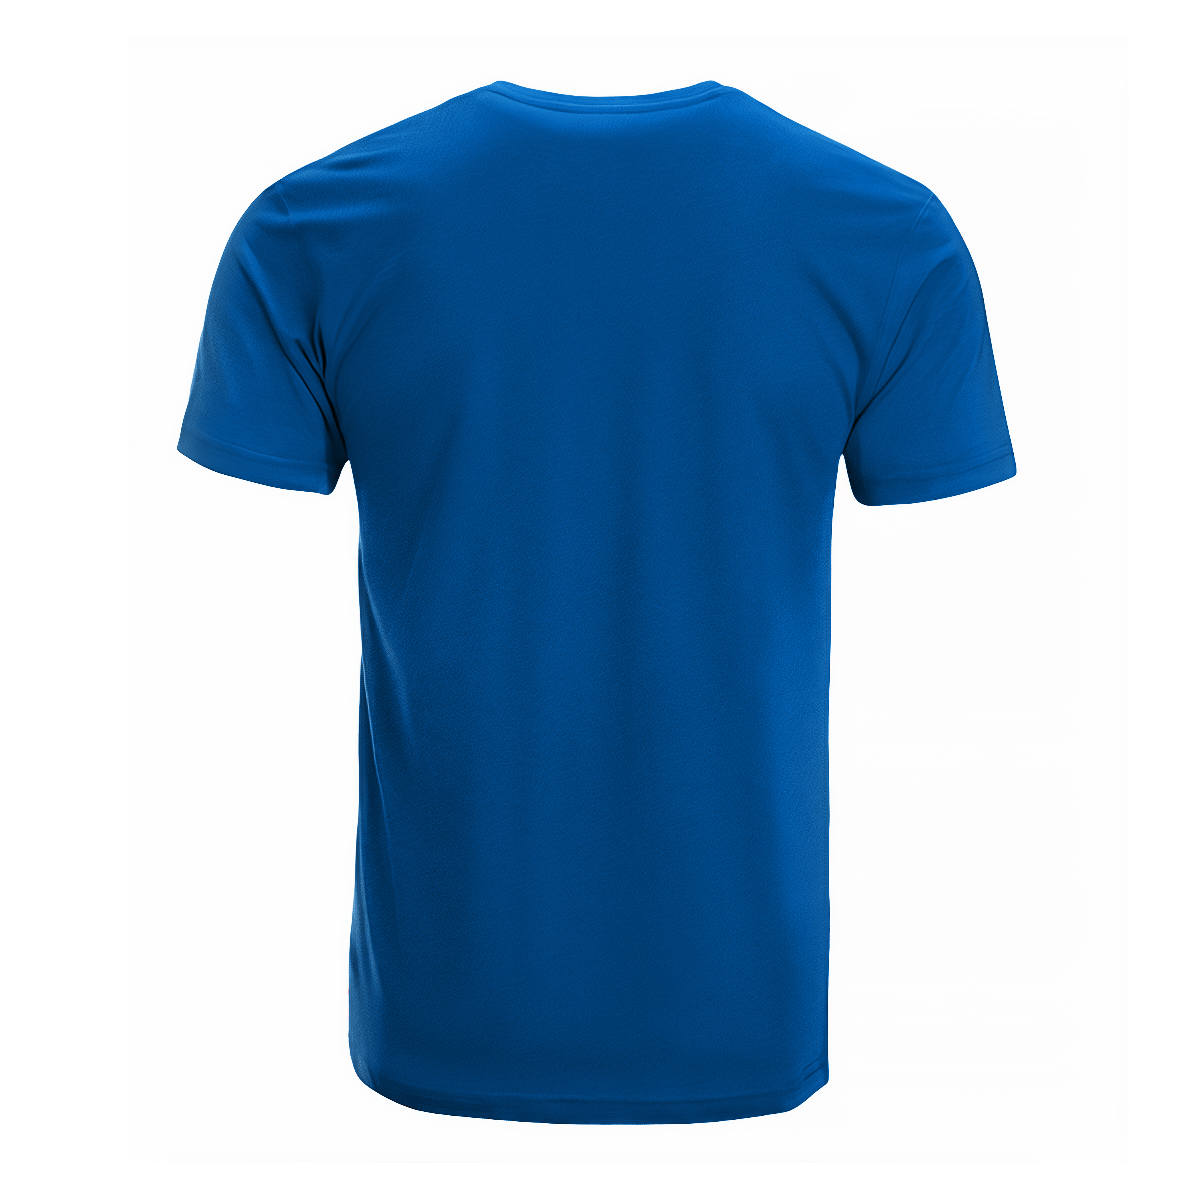 Urquhart Tartan Crest T-shirt - I'm not yelling style